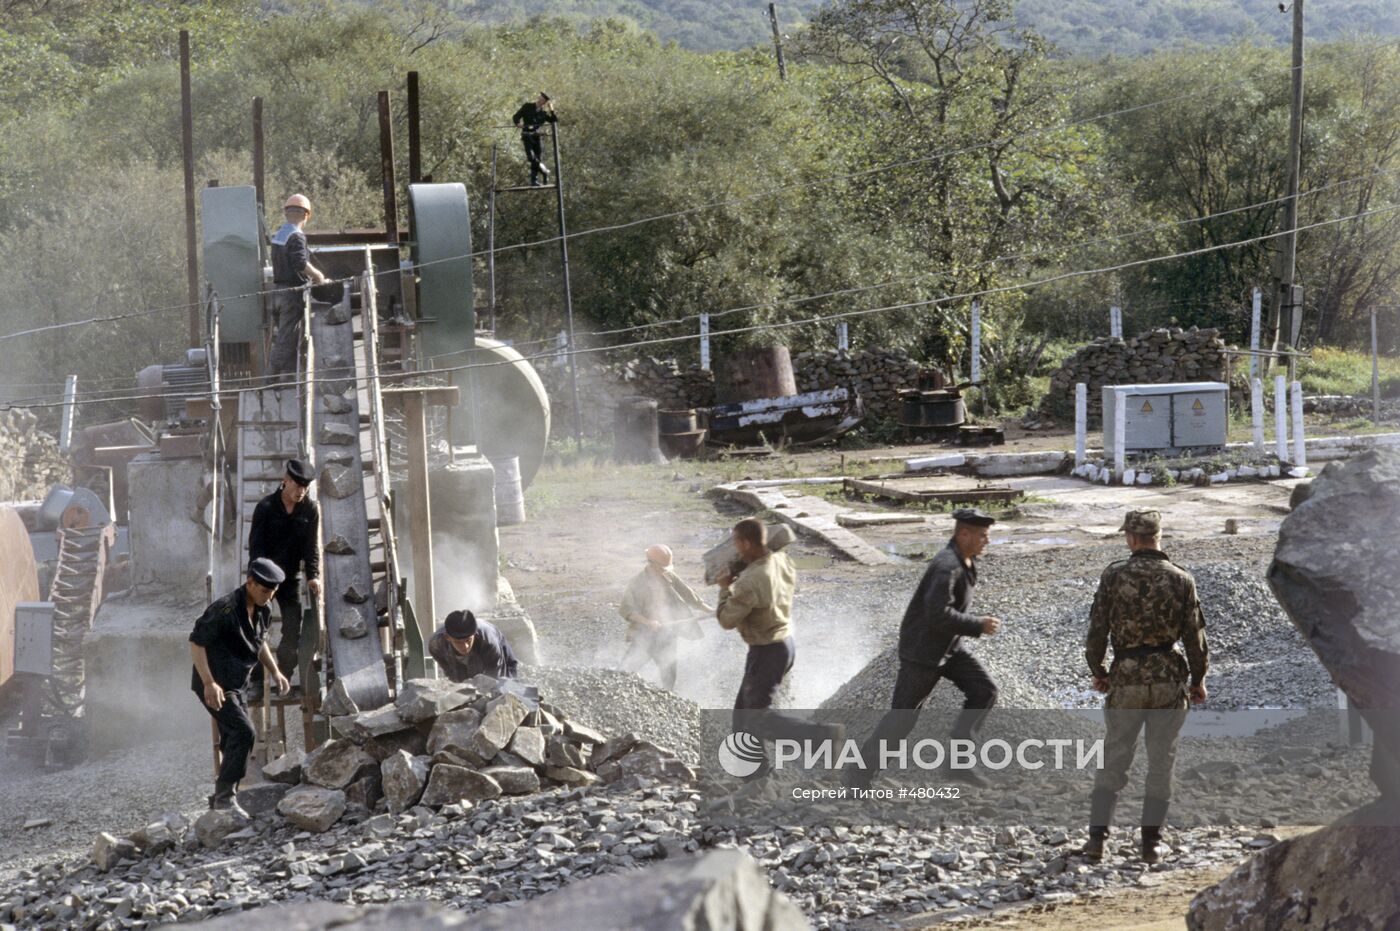 дисбат на острове русский в 1980 1983г